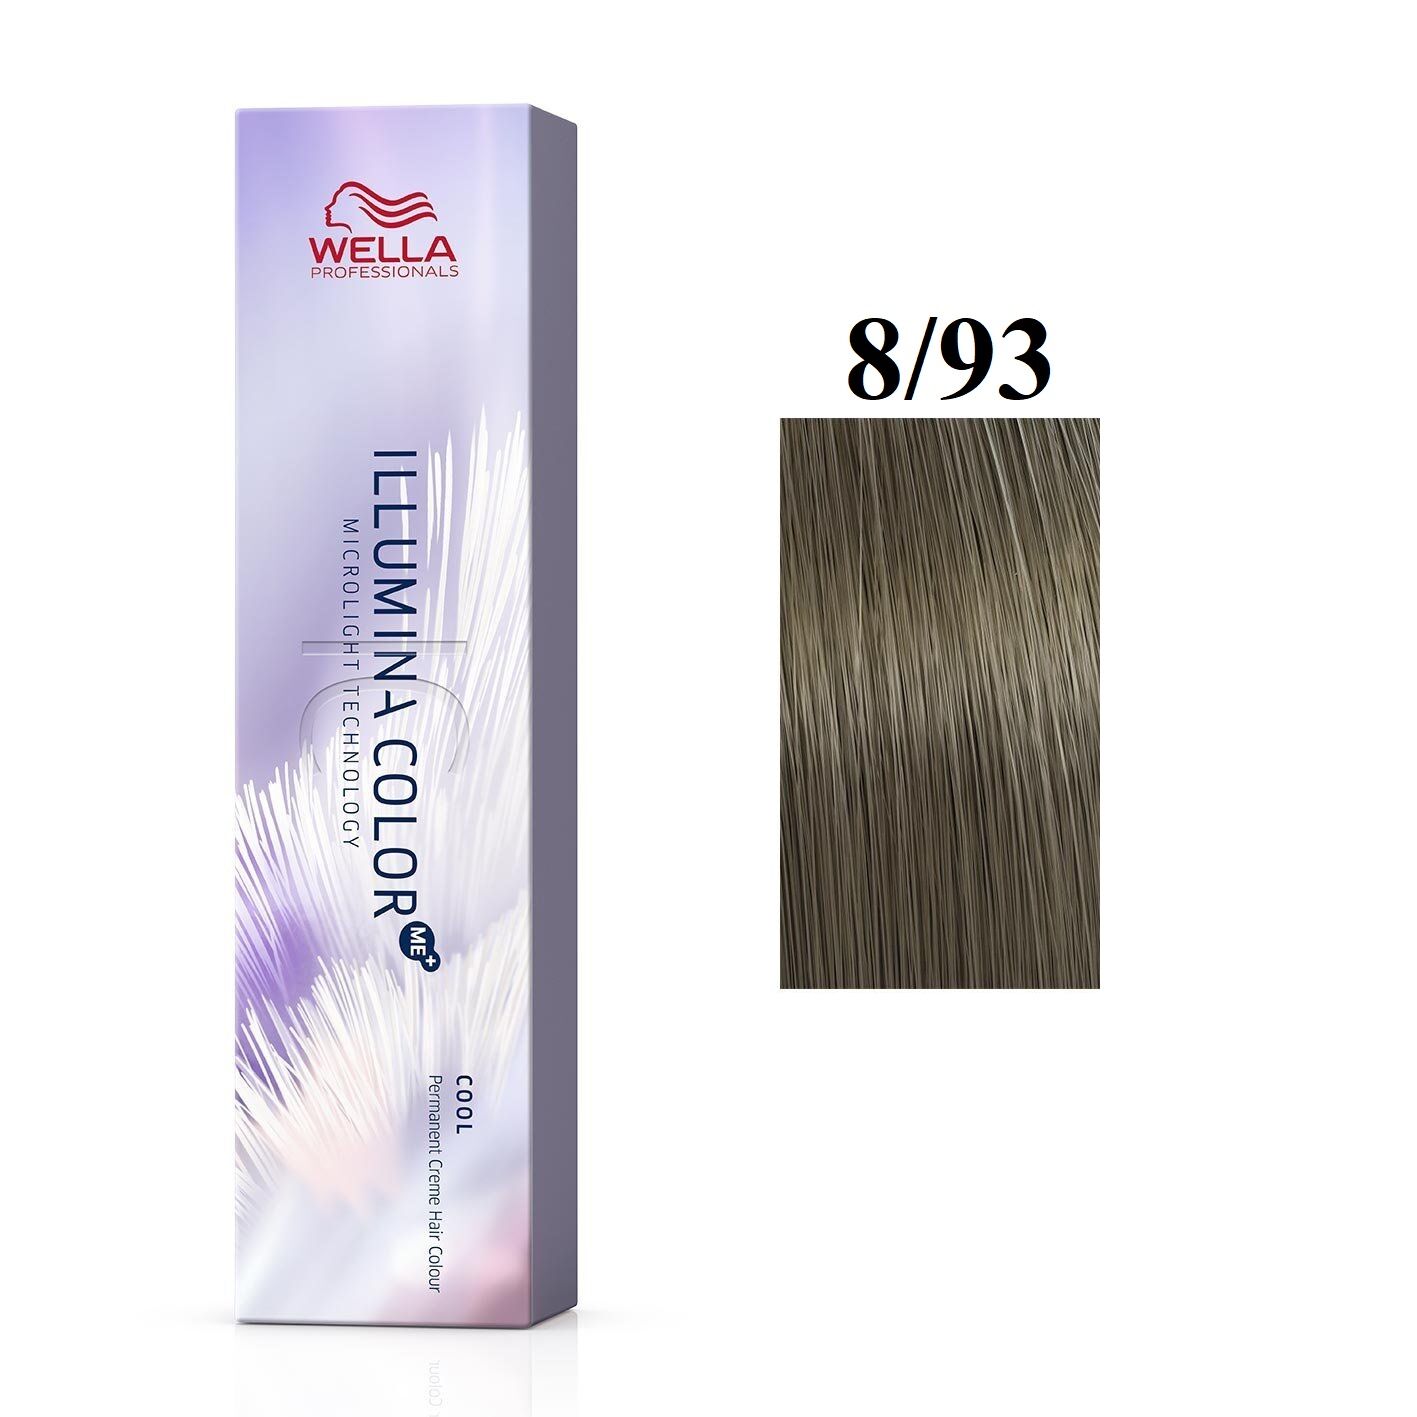 Wella Professionals Illumina Color Saç Boyası 60 Ml. - 8/93